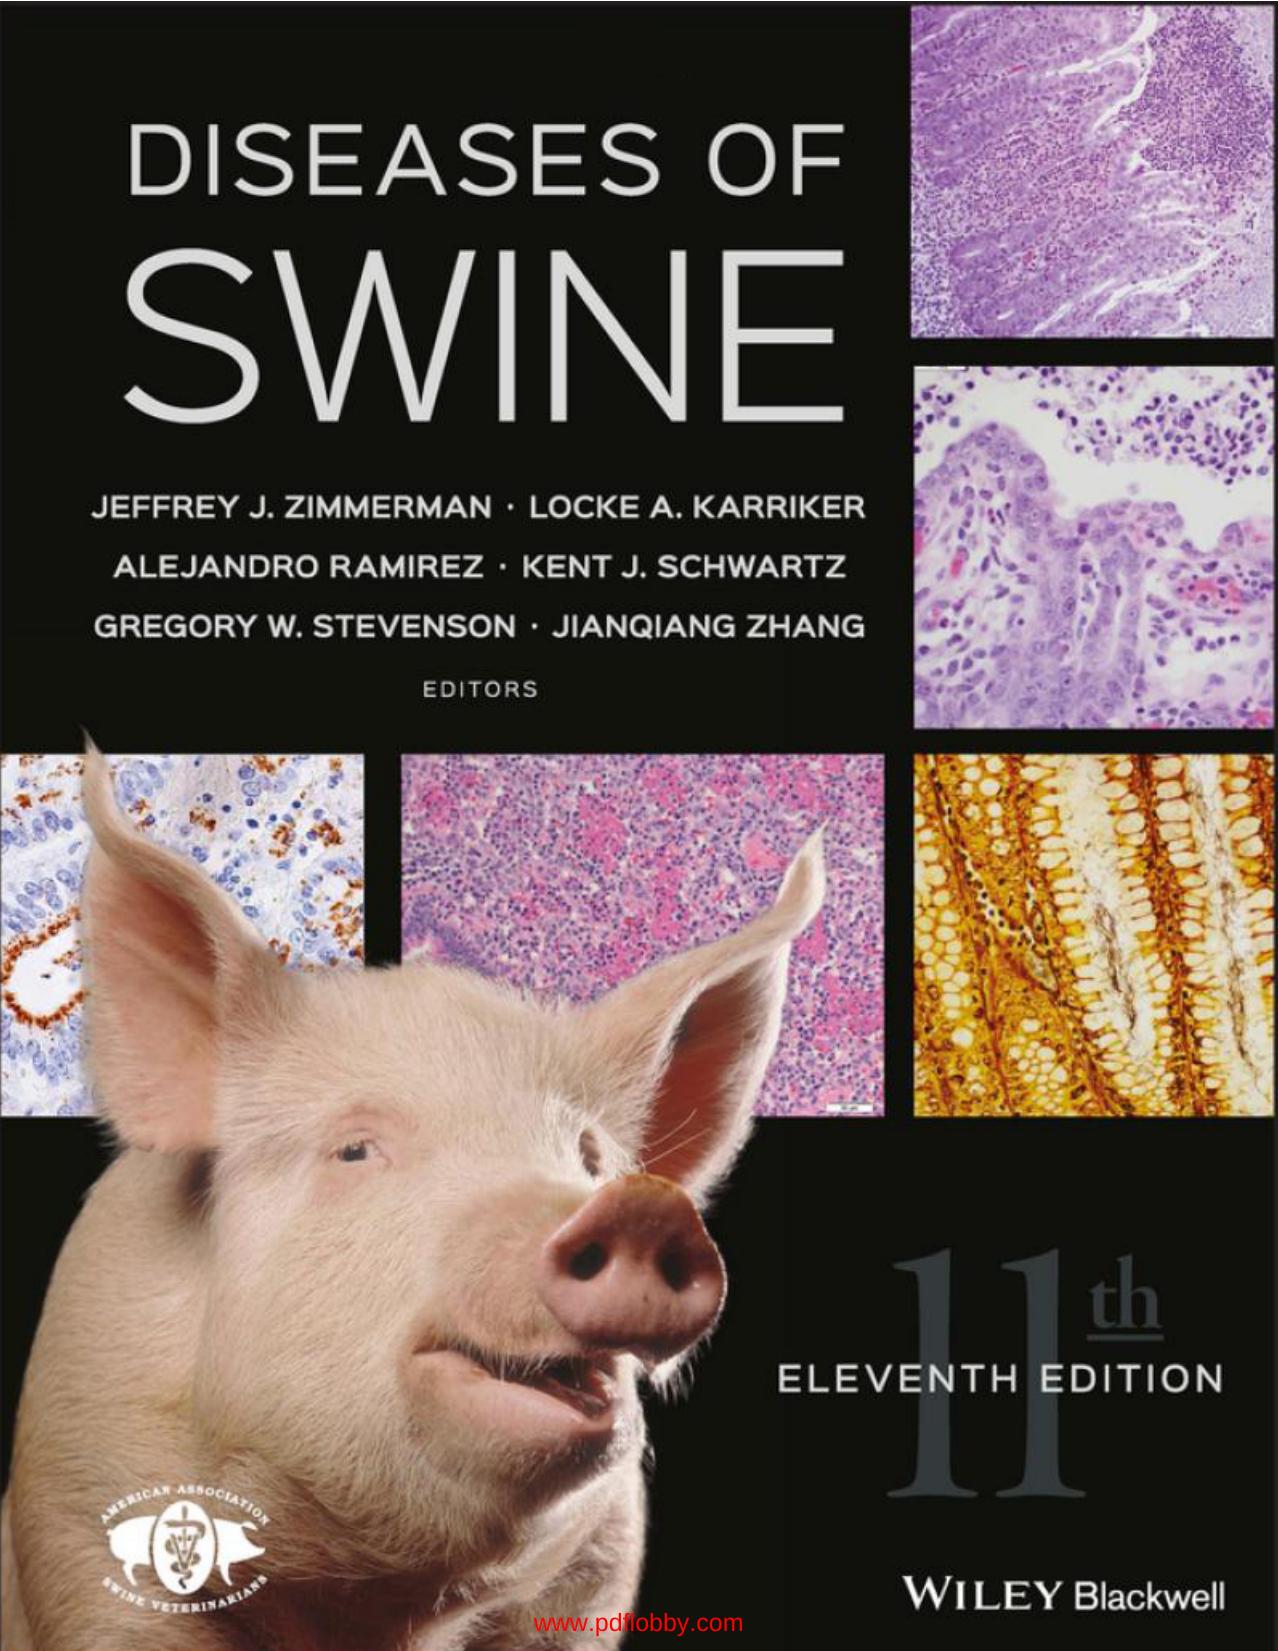 Diseases of Swine, 11th Edition